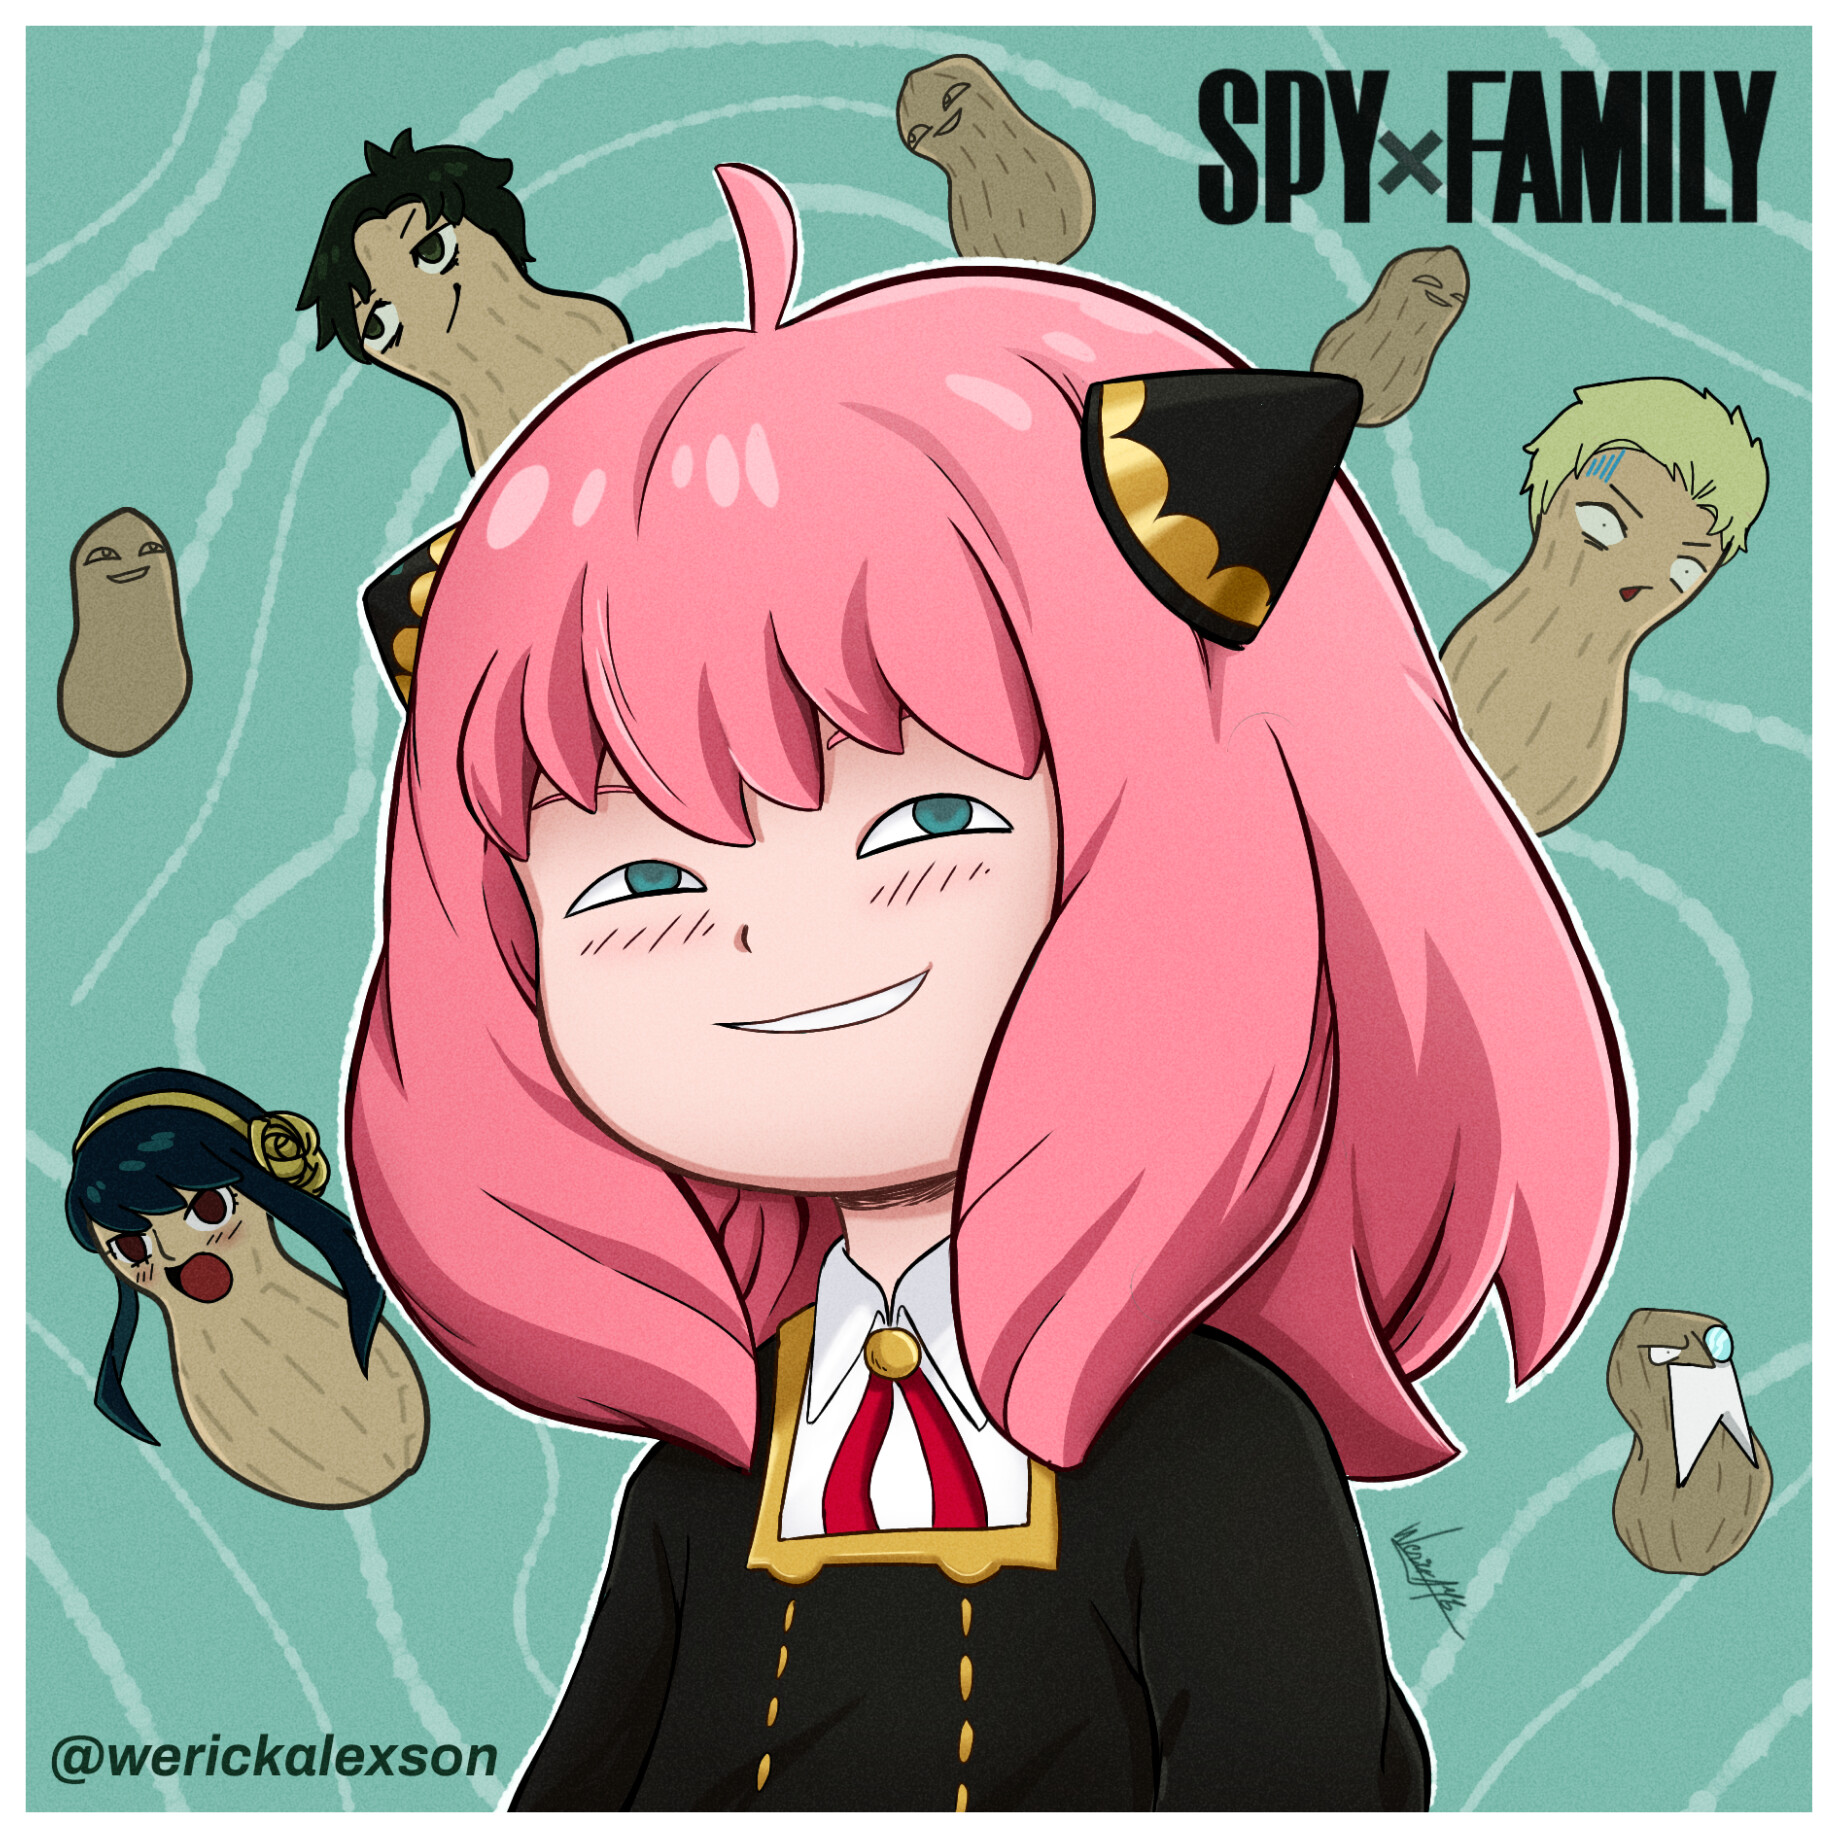 ArtStation - Anya Spy x family